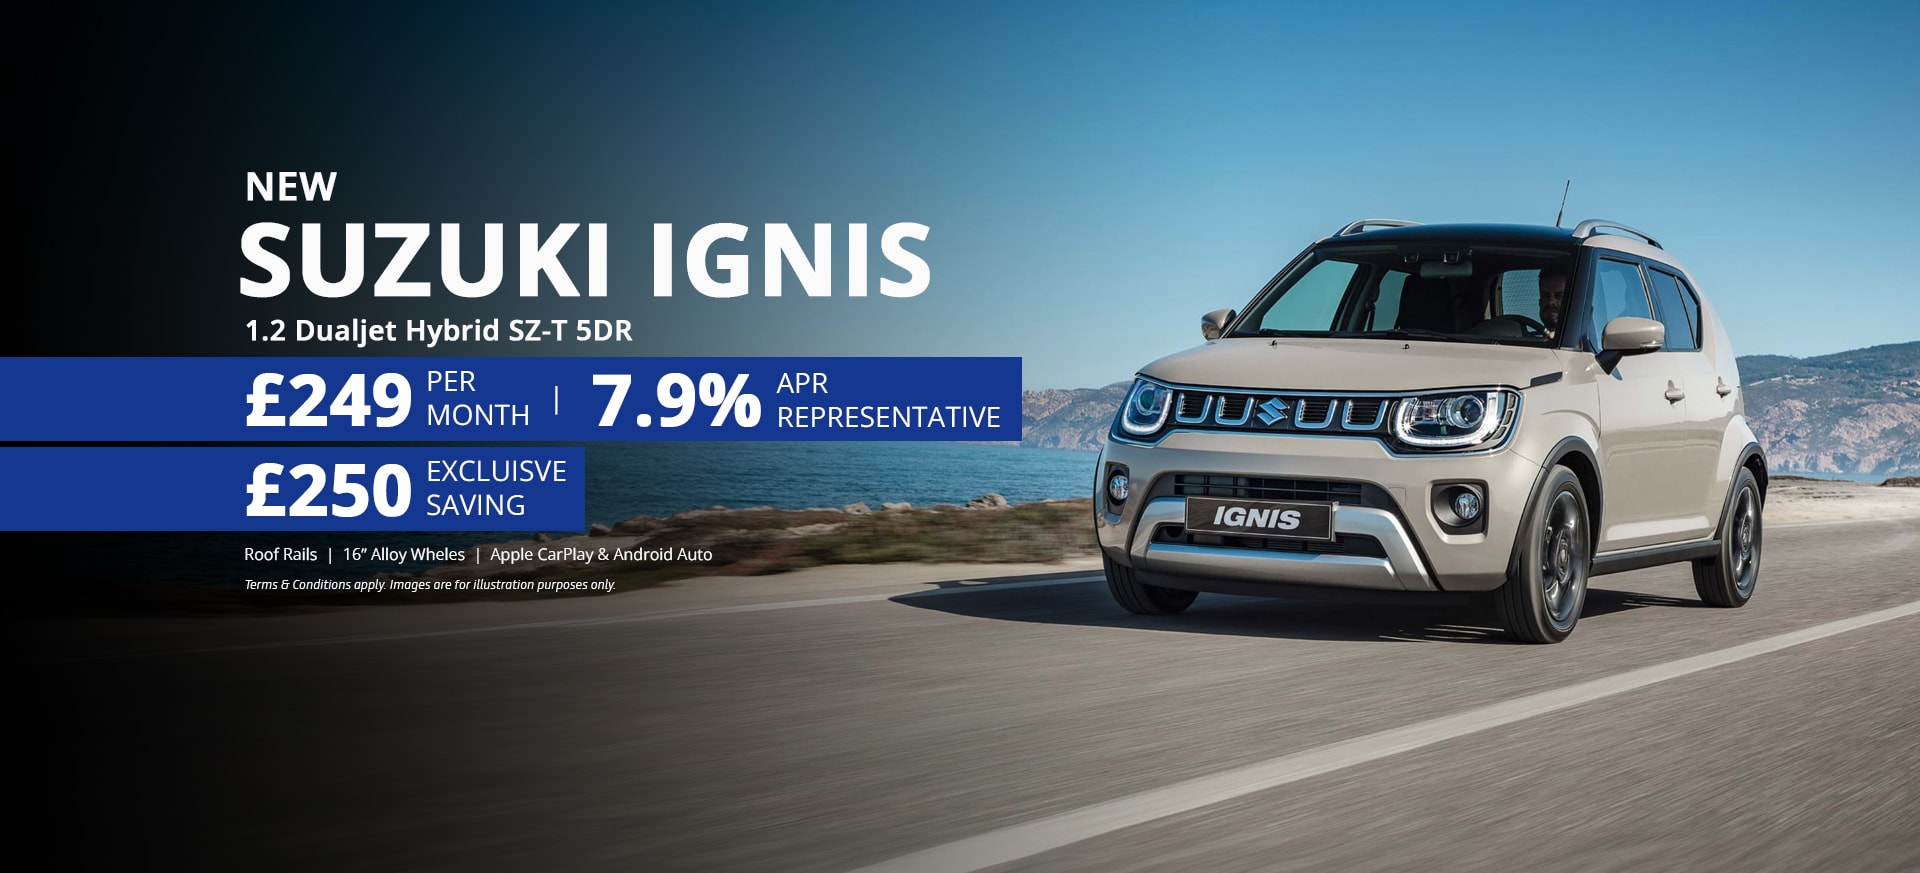 New Suzuki Ignis